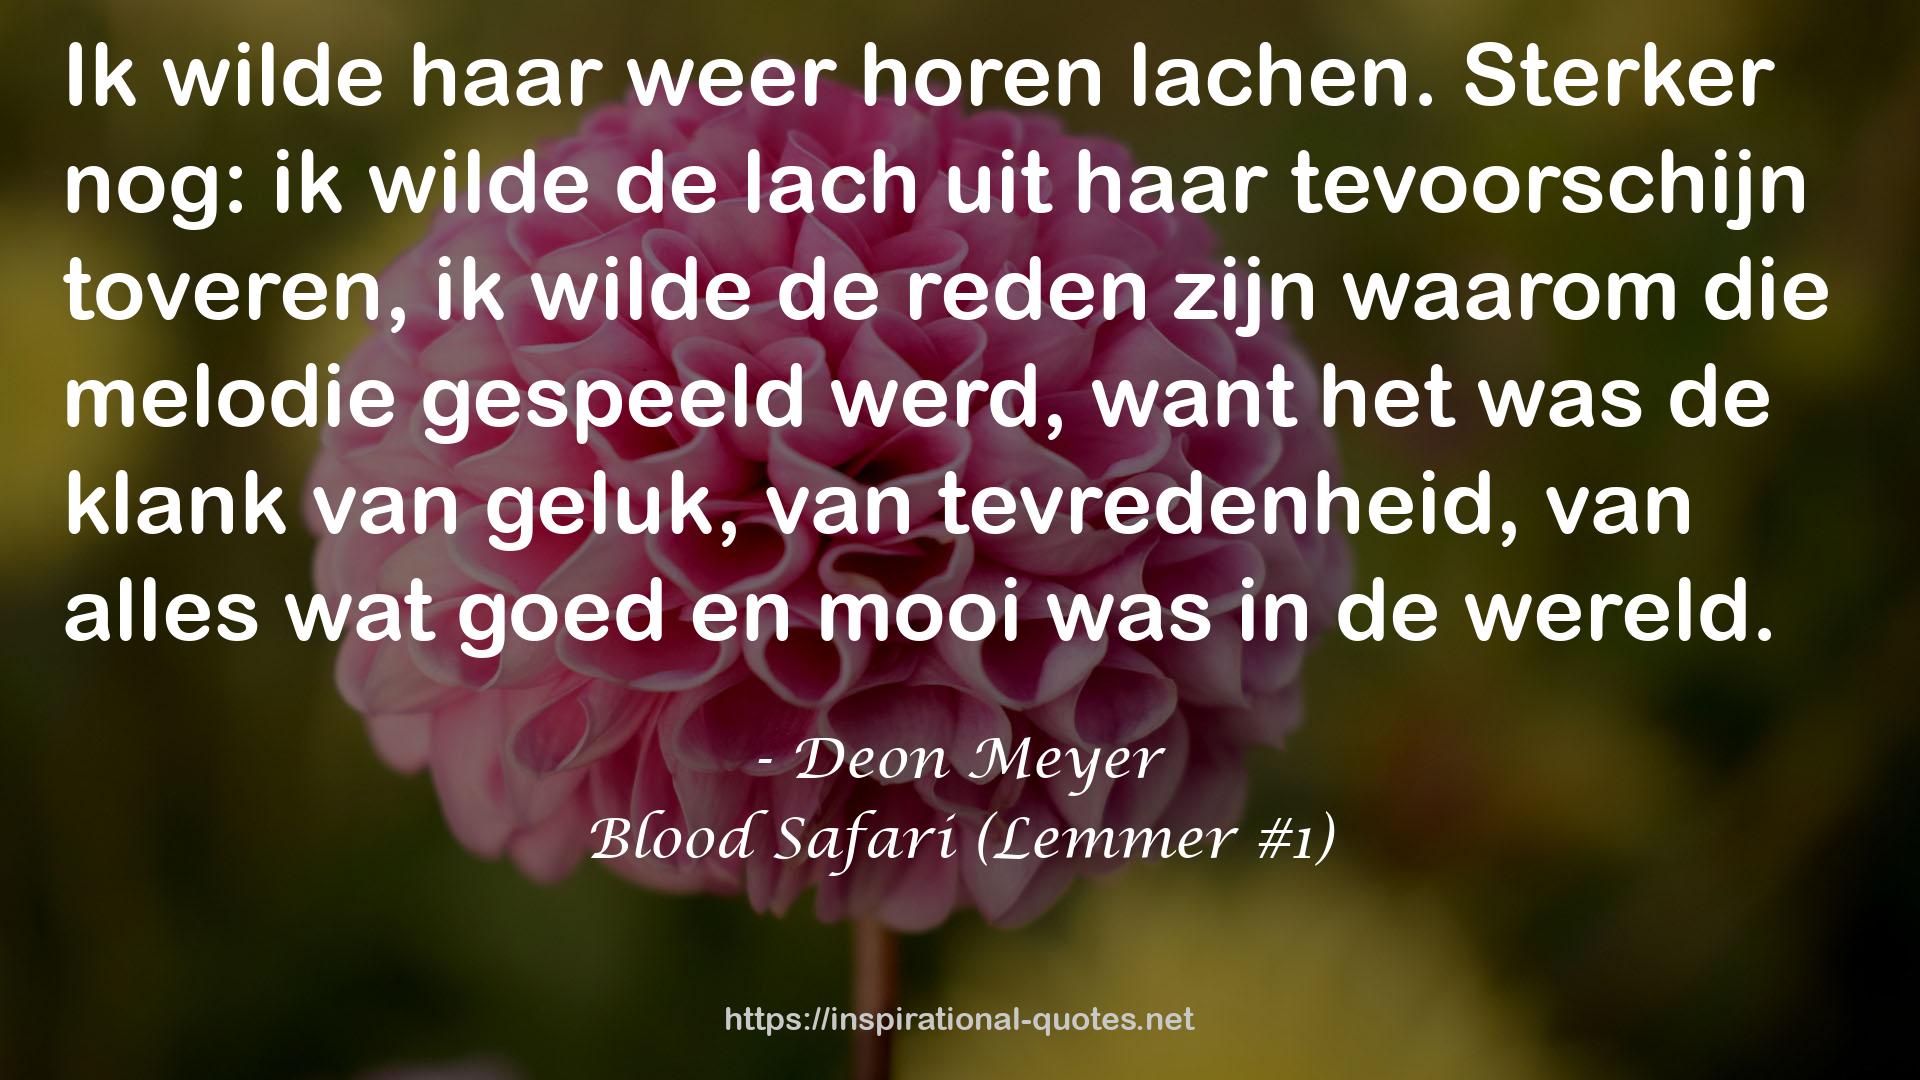 Blood Safari (Lemmer #1) QUOTES